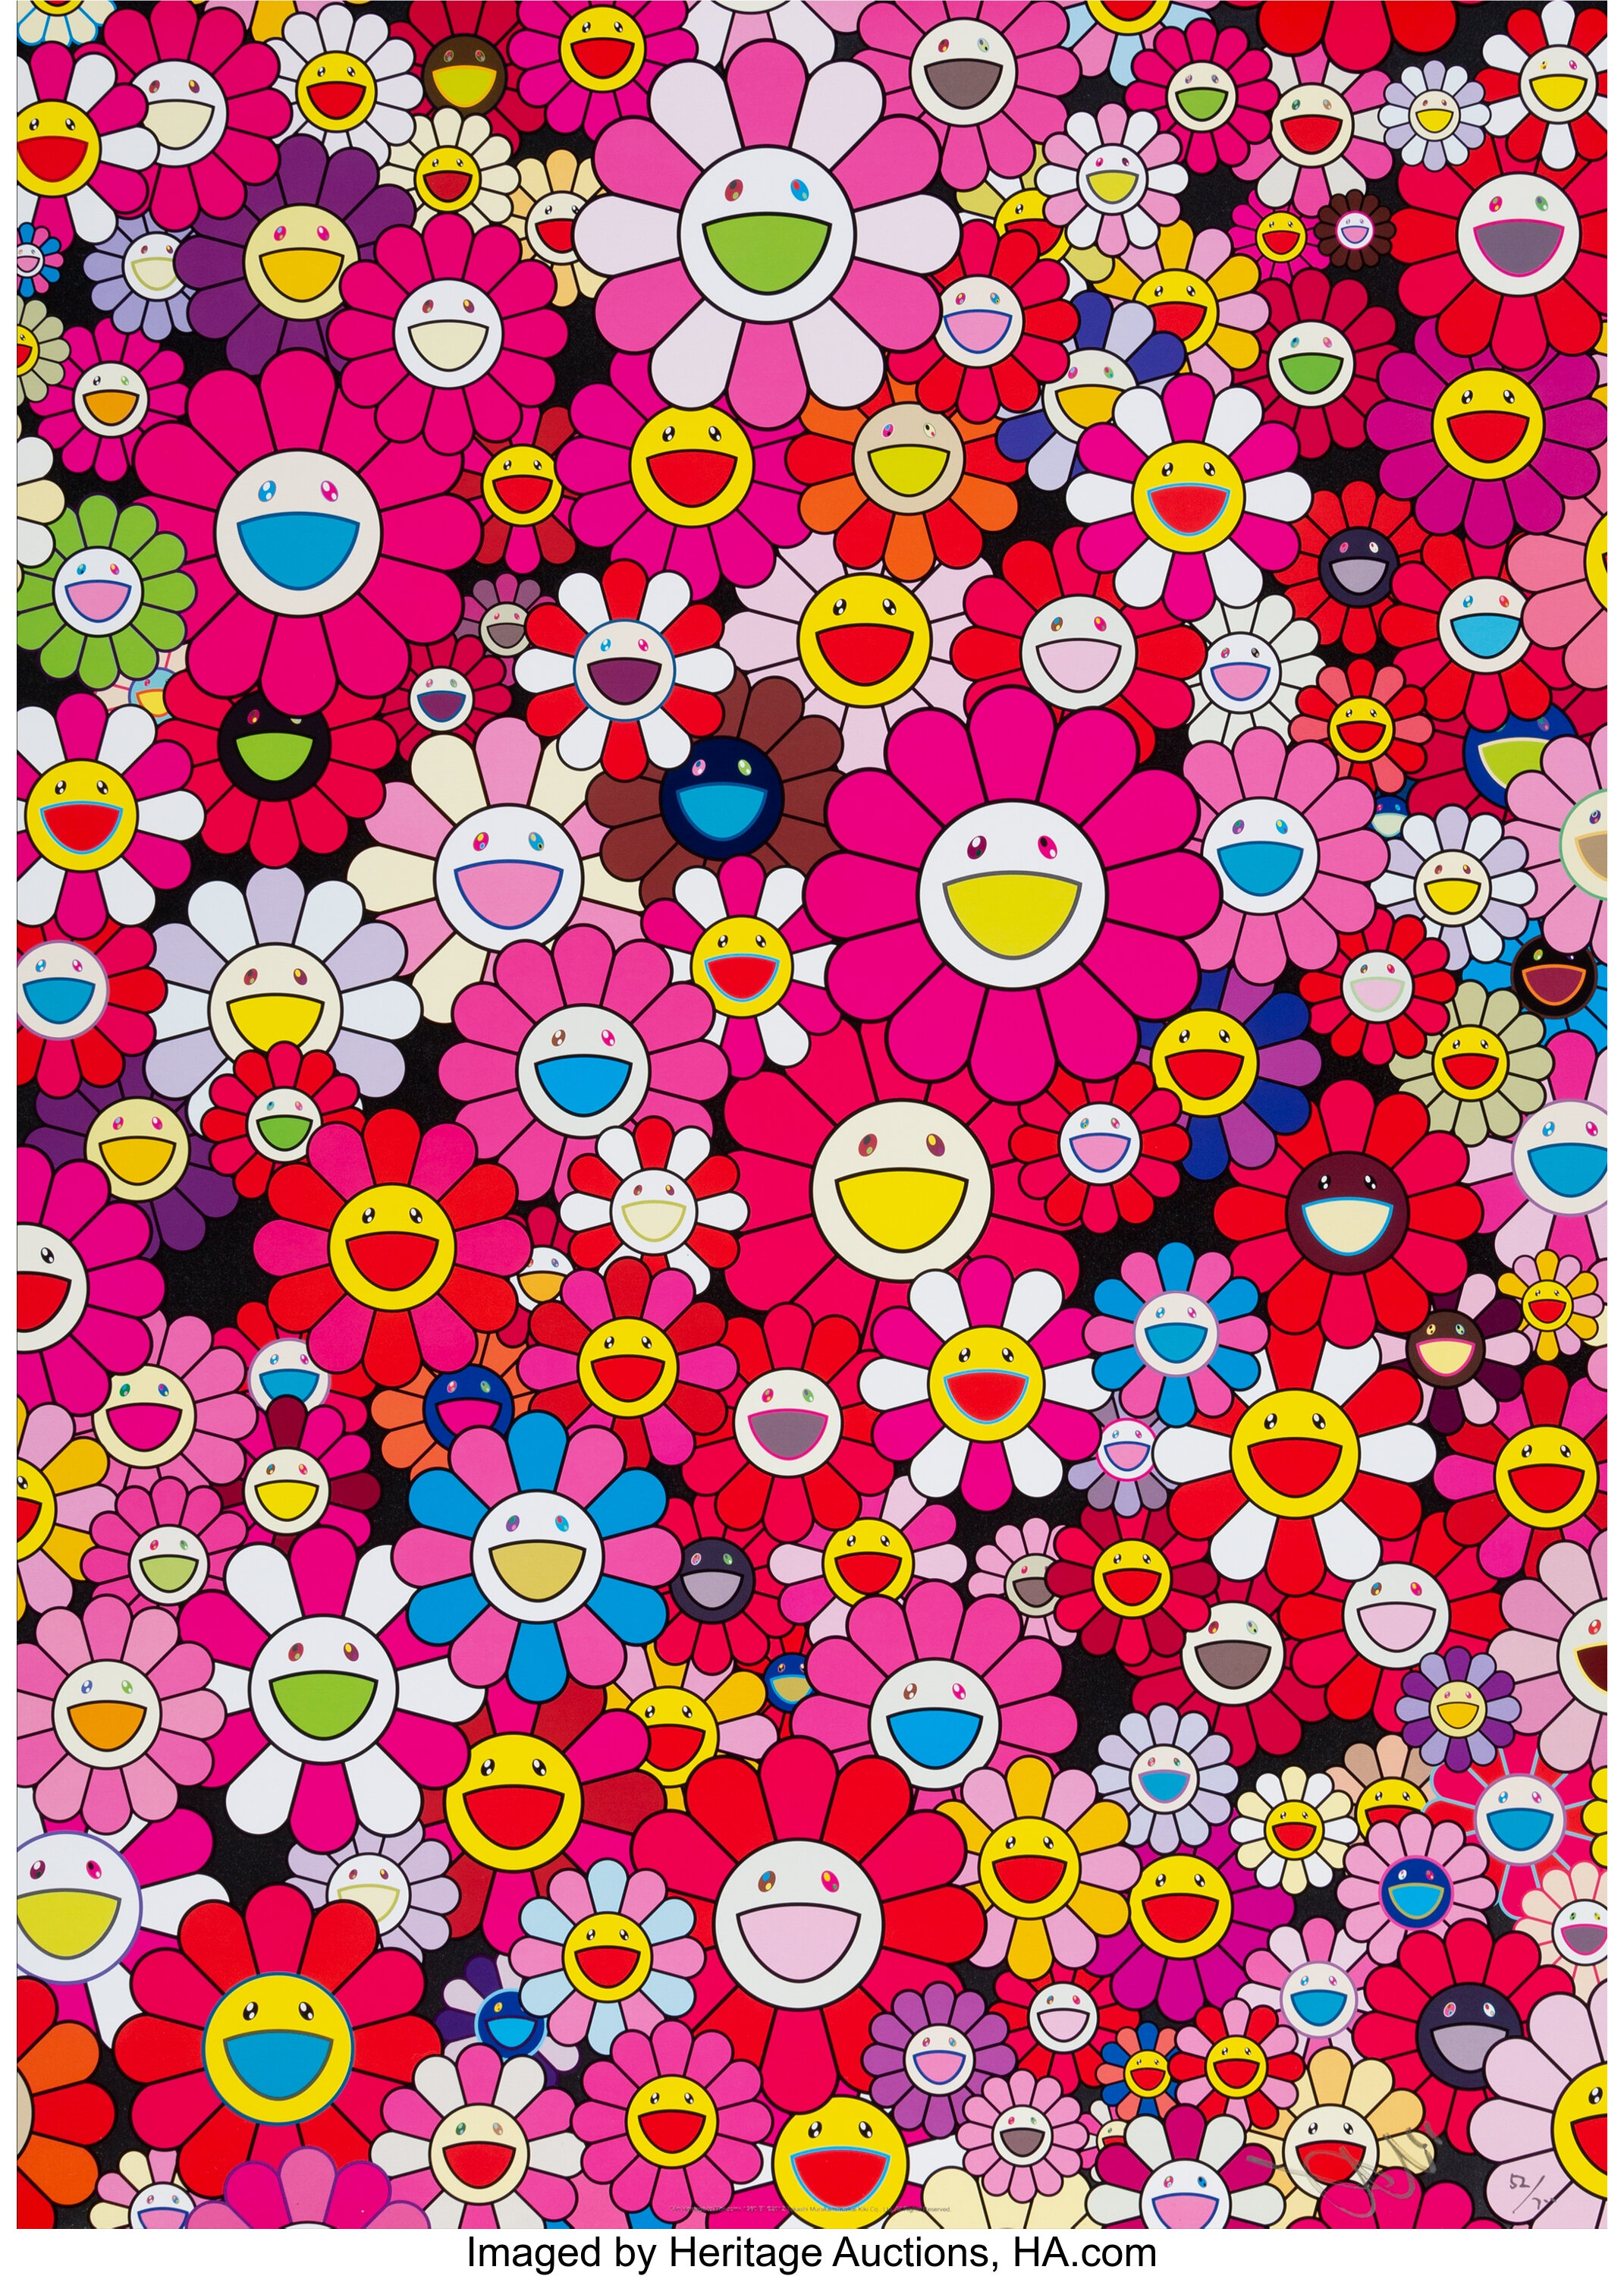 Takashi Murakami (b. 1962). An Homage to Monopink 1960 B, 2012